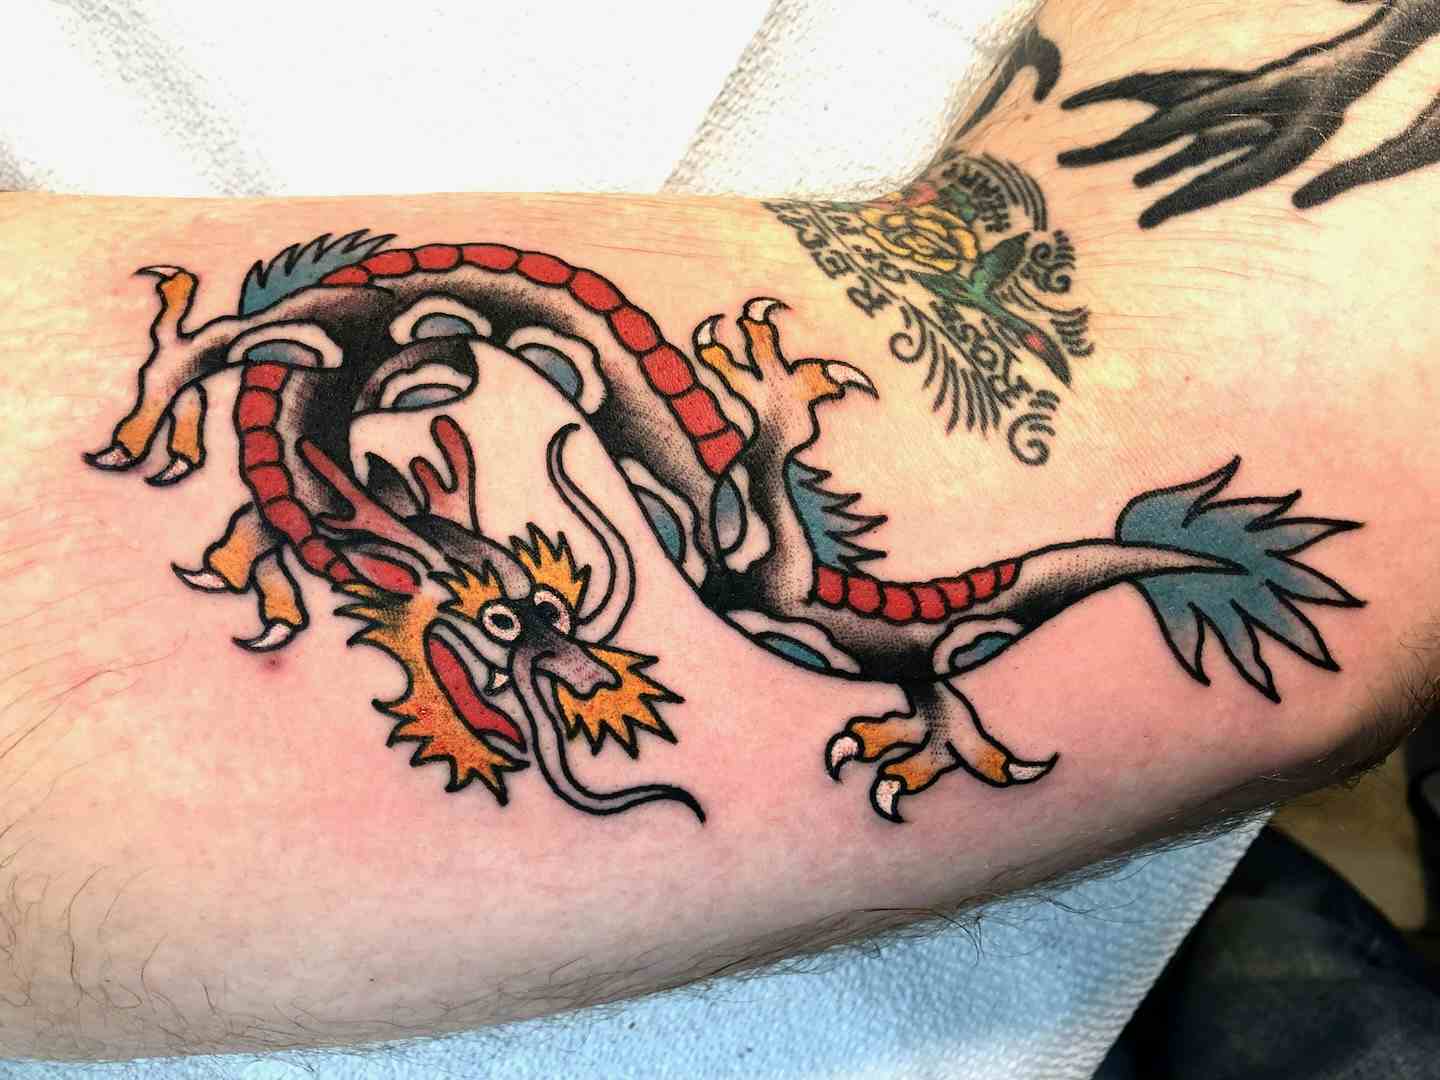 American traditional dragon tattoo